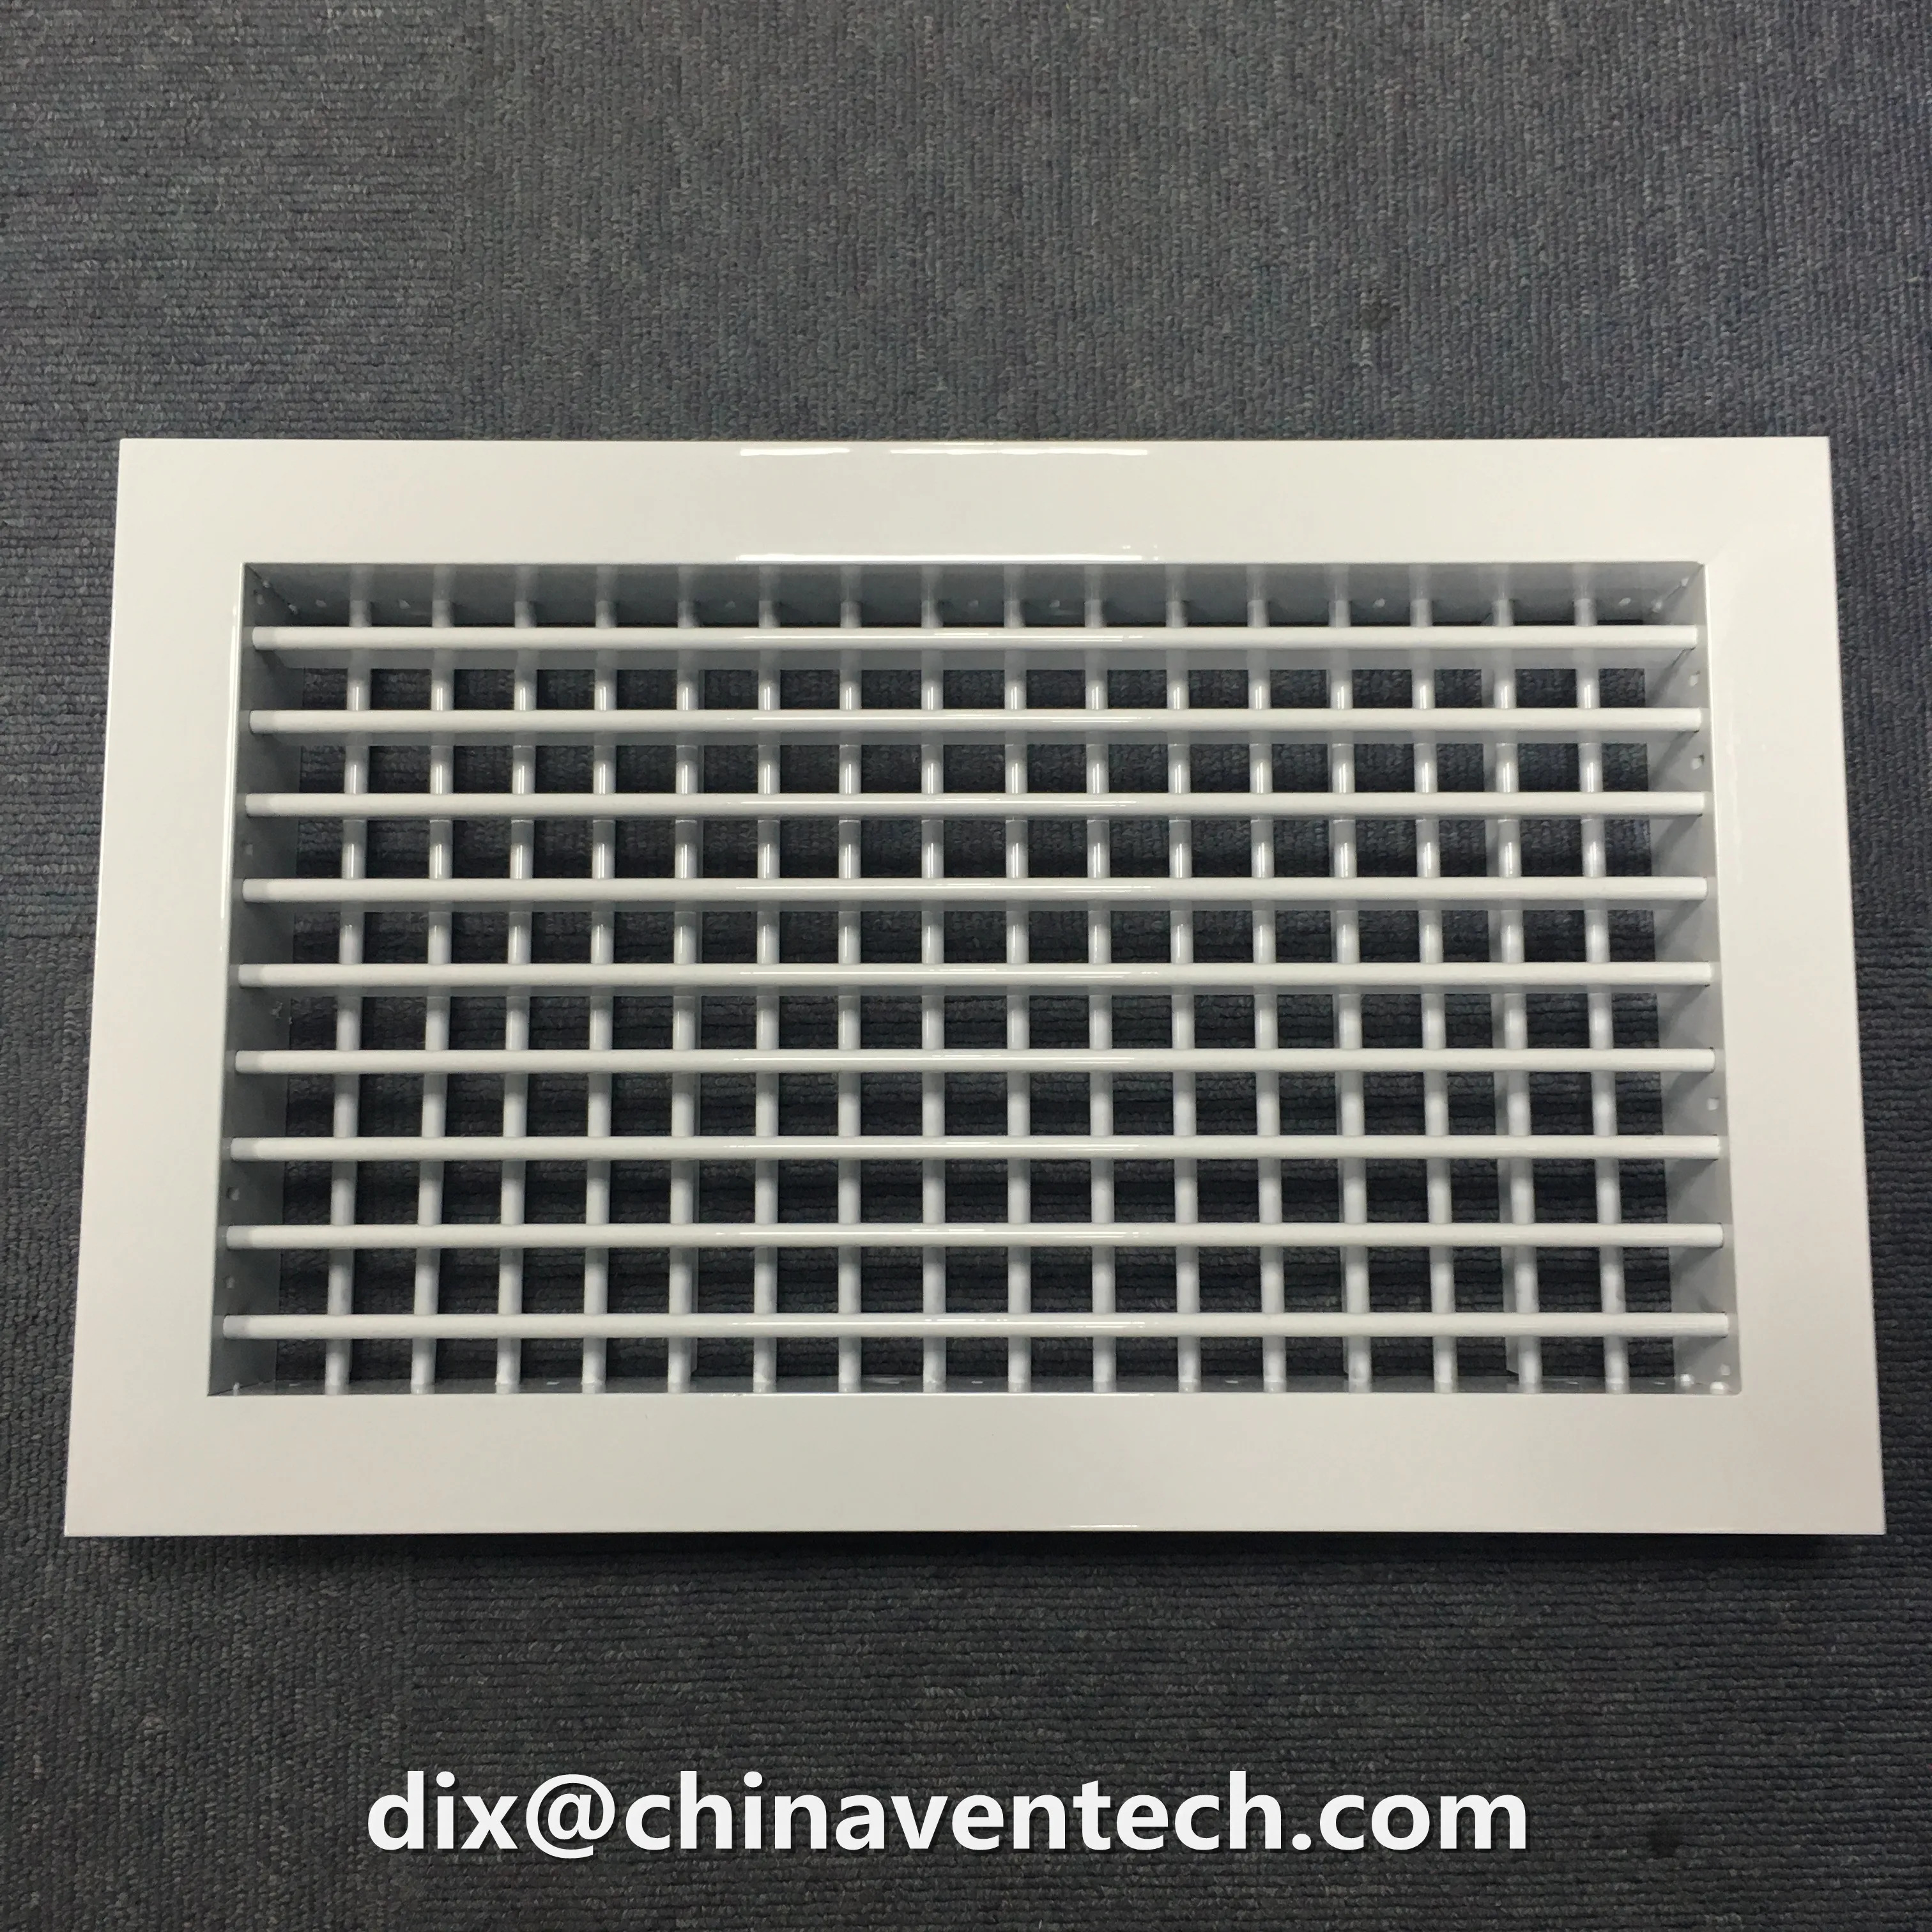 HVAC tools ventilation double deflection grille